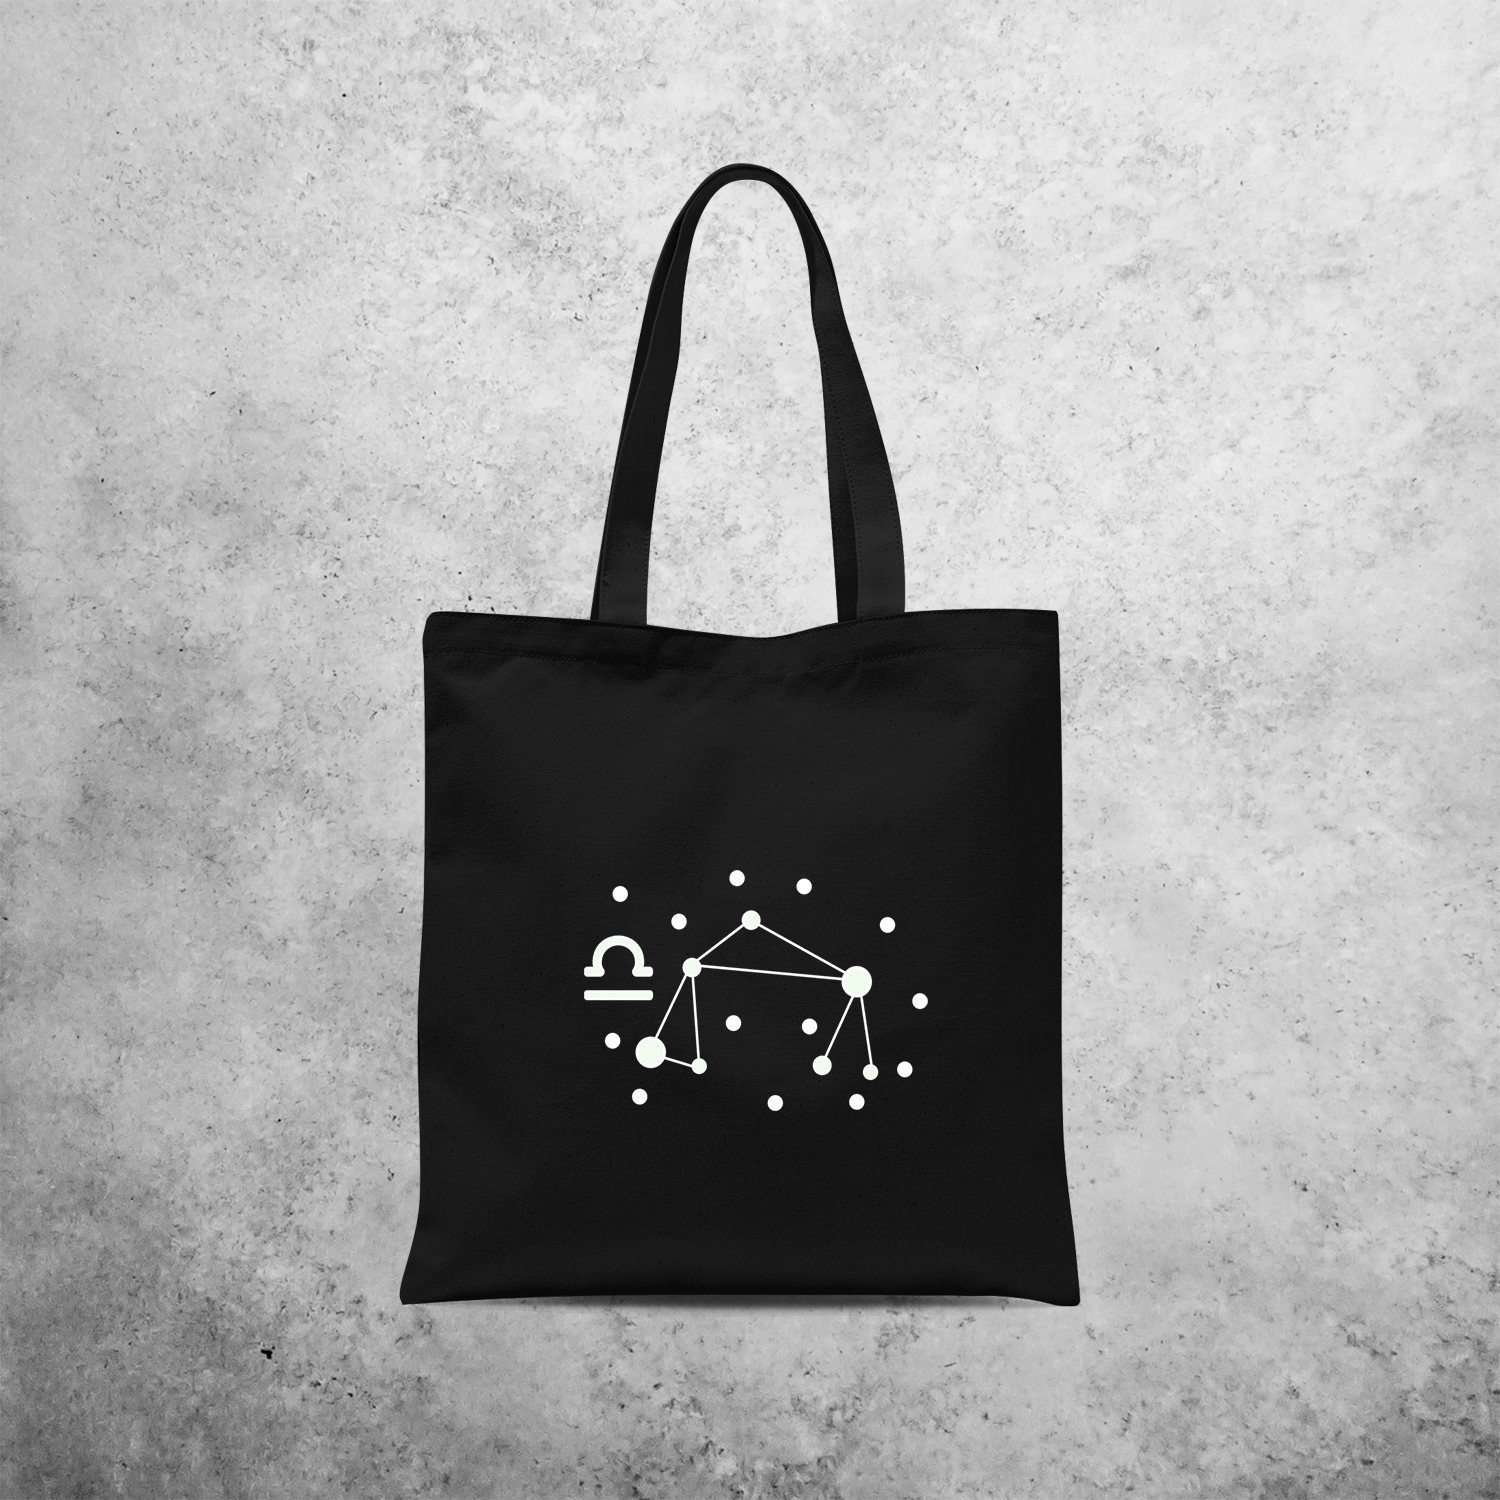 Star sign glow in the dark tote bag